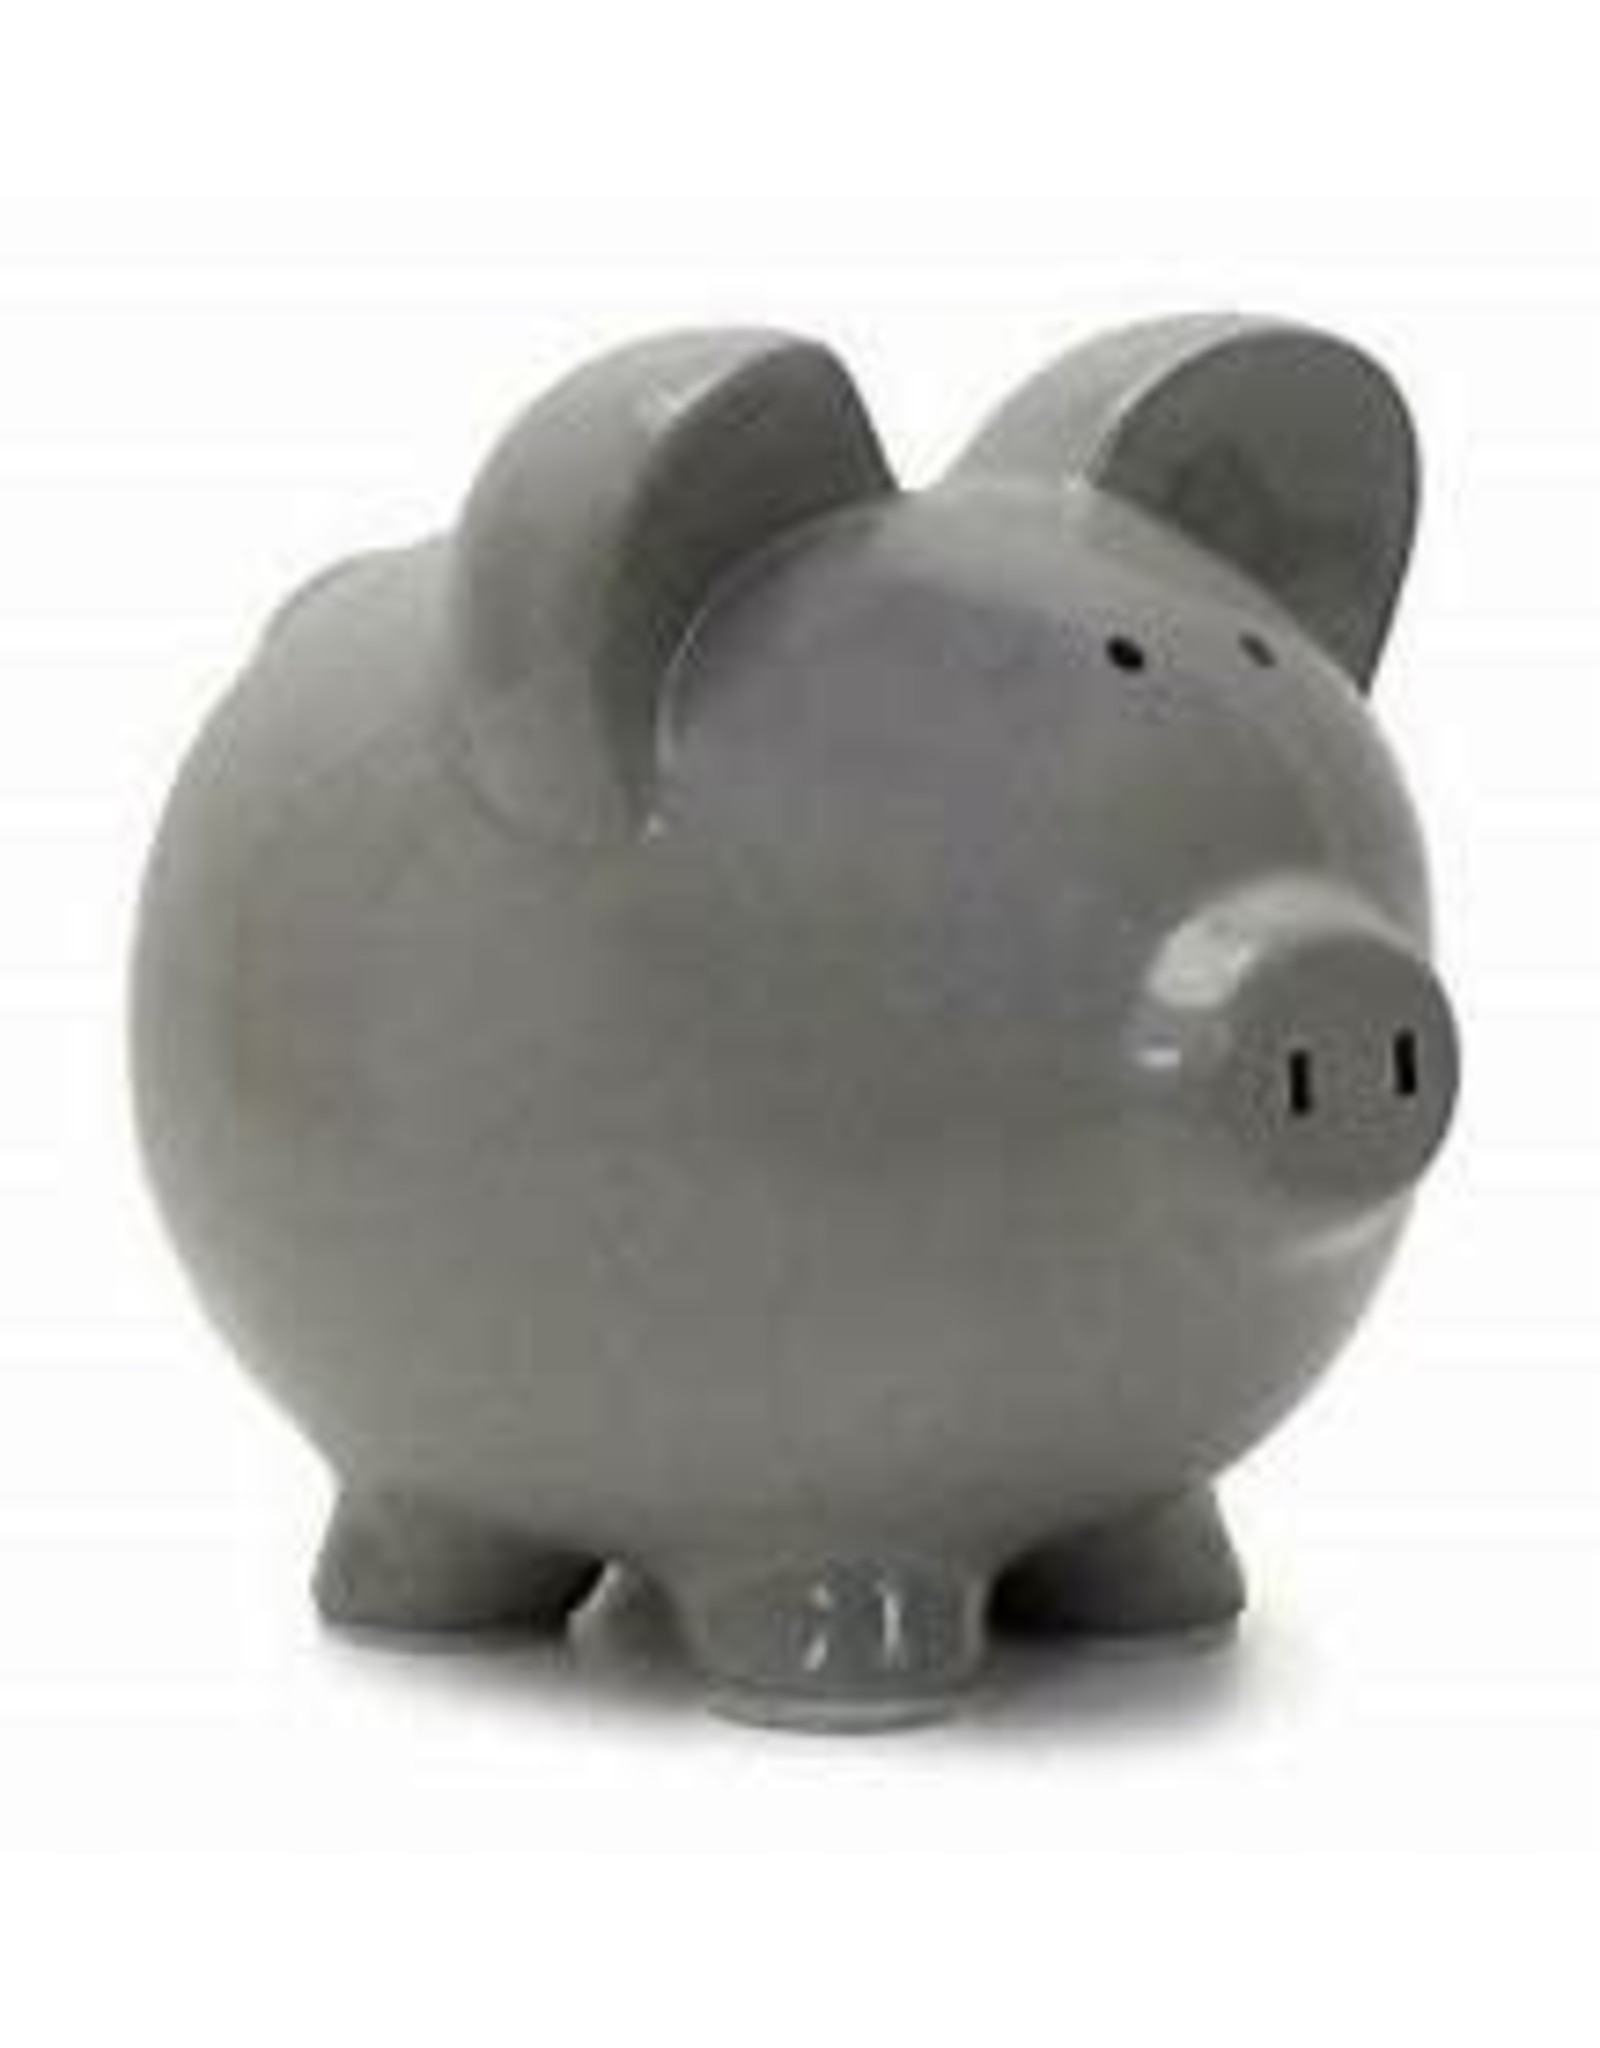 Grey Piggy Bank